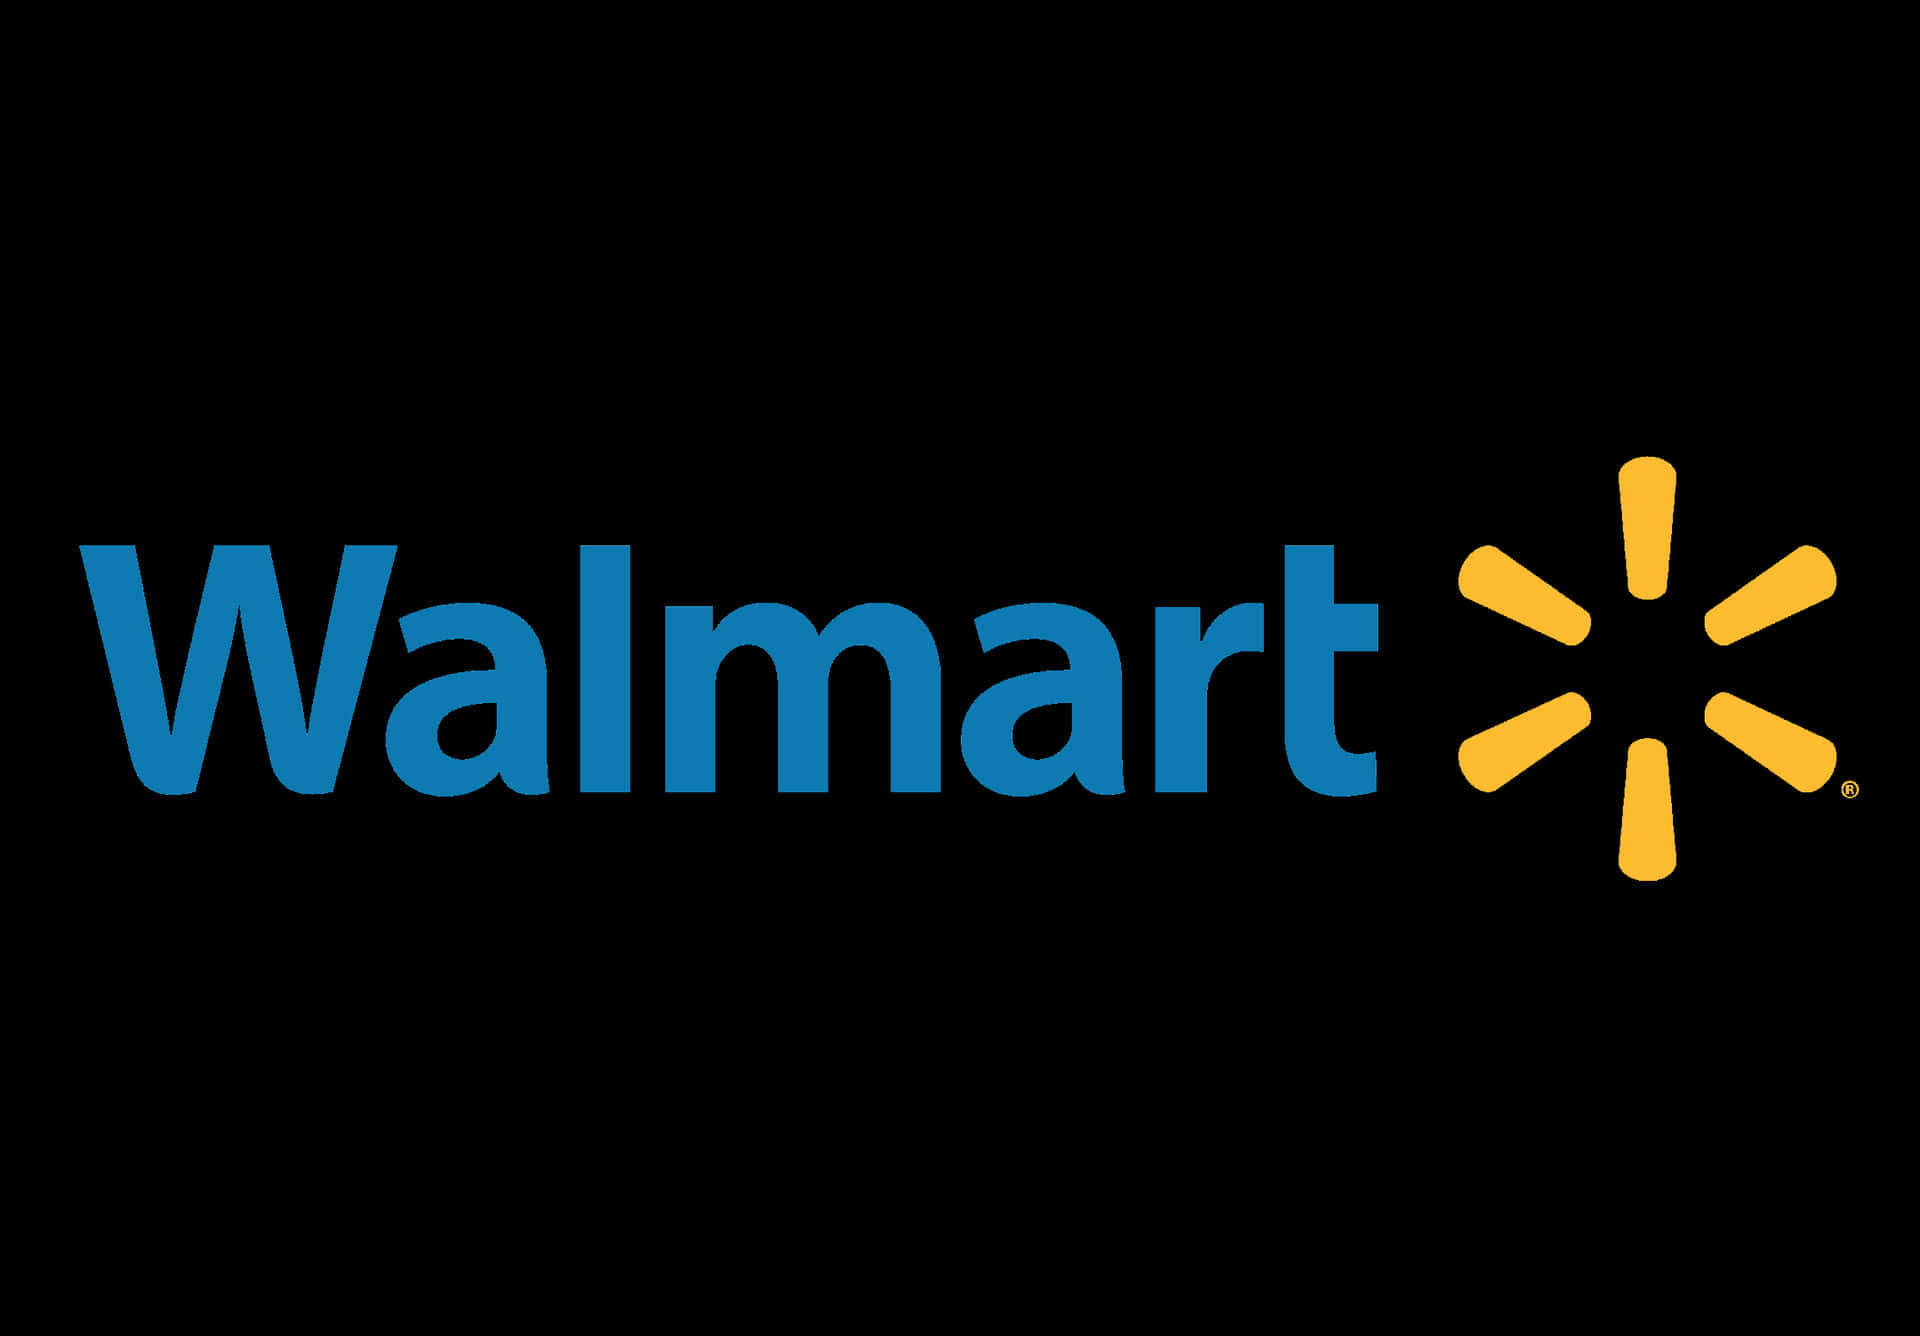 walmart logo on a black background